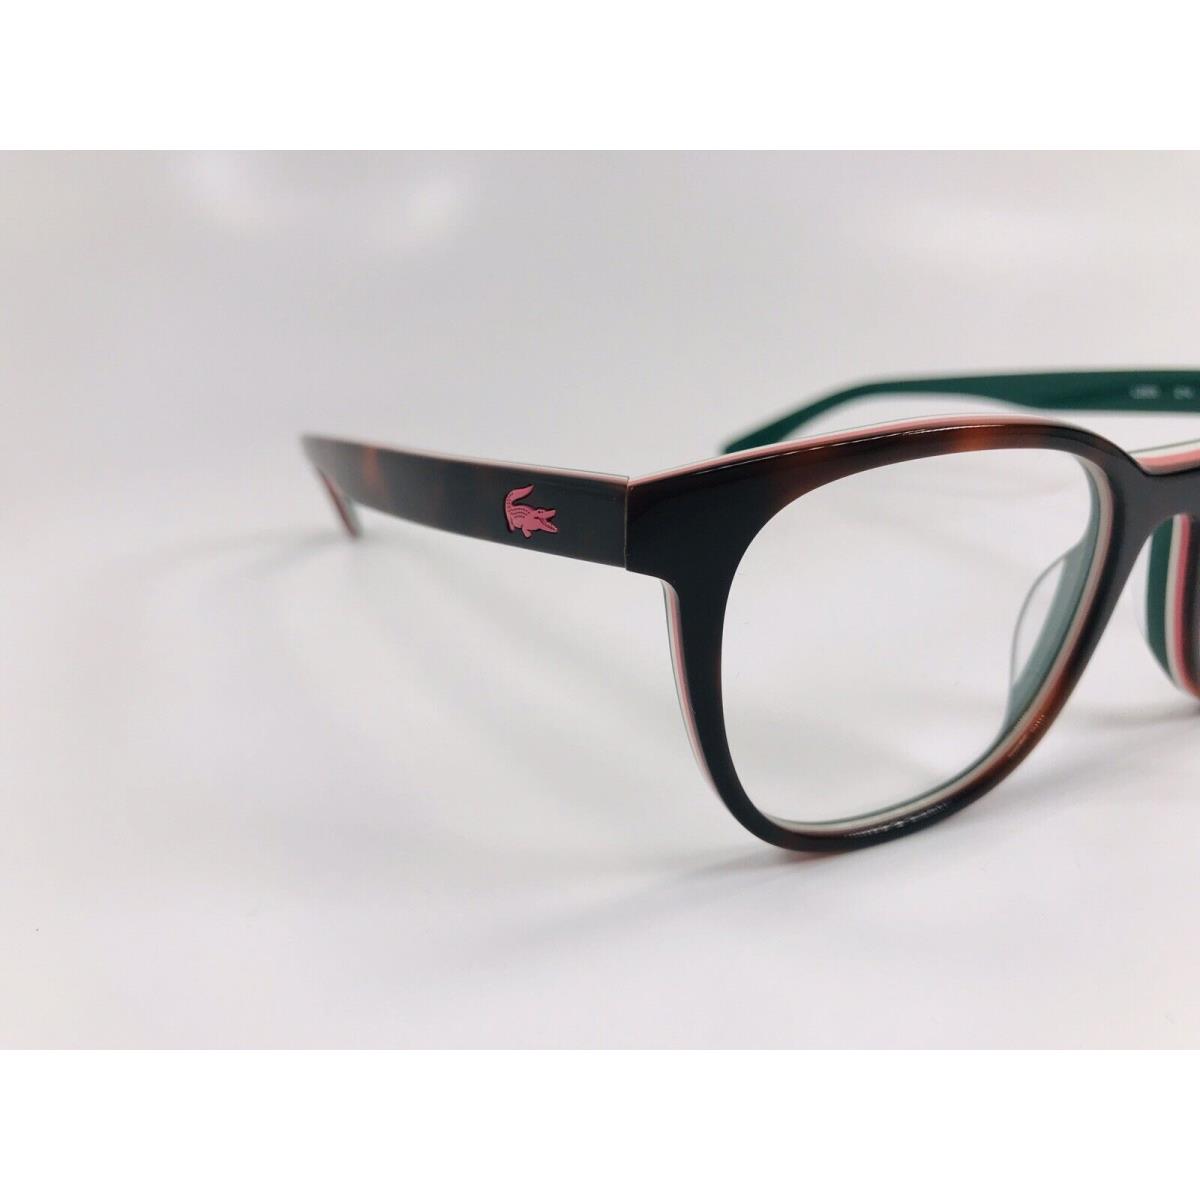 Lacoste eyeglasses  - 214 , Dark Havana & Multi Colored Layers Frame 3